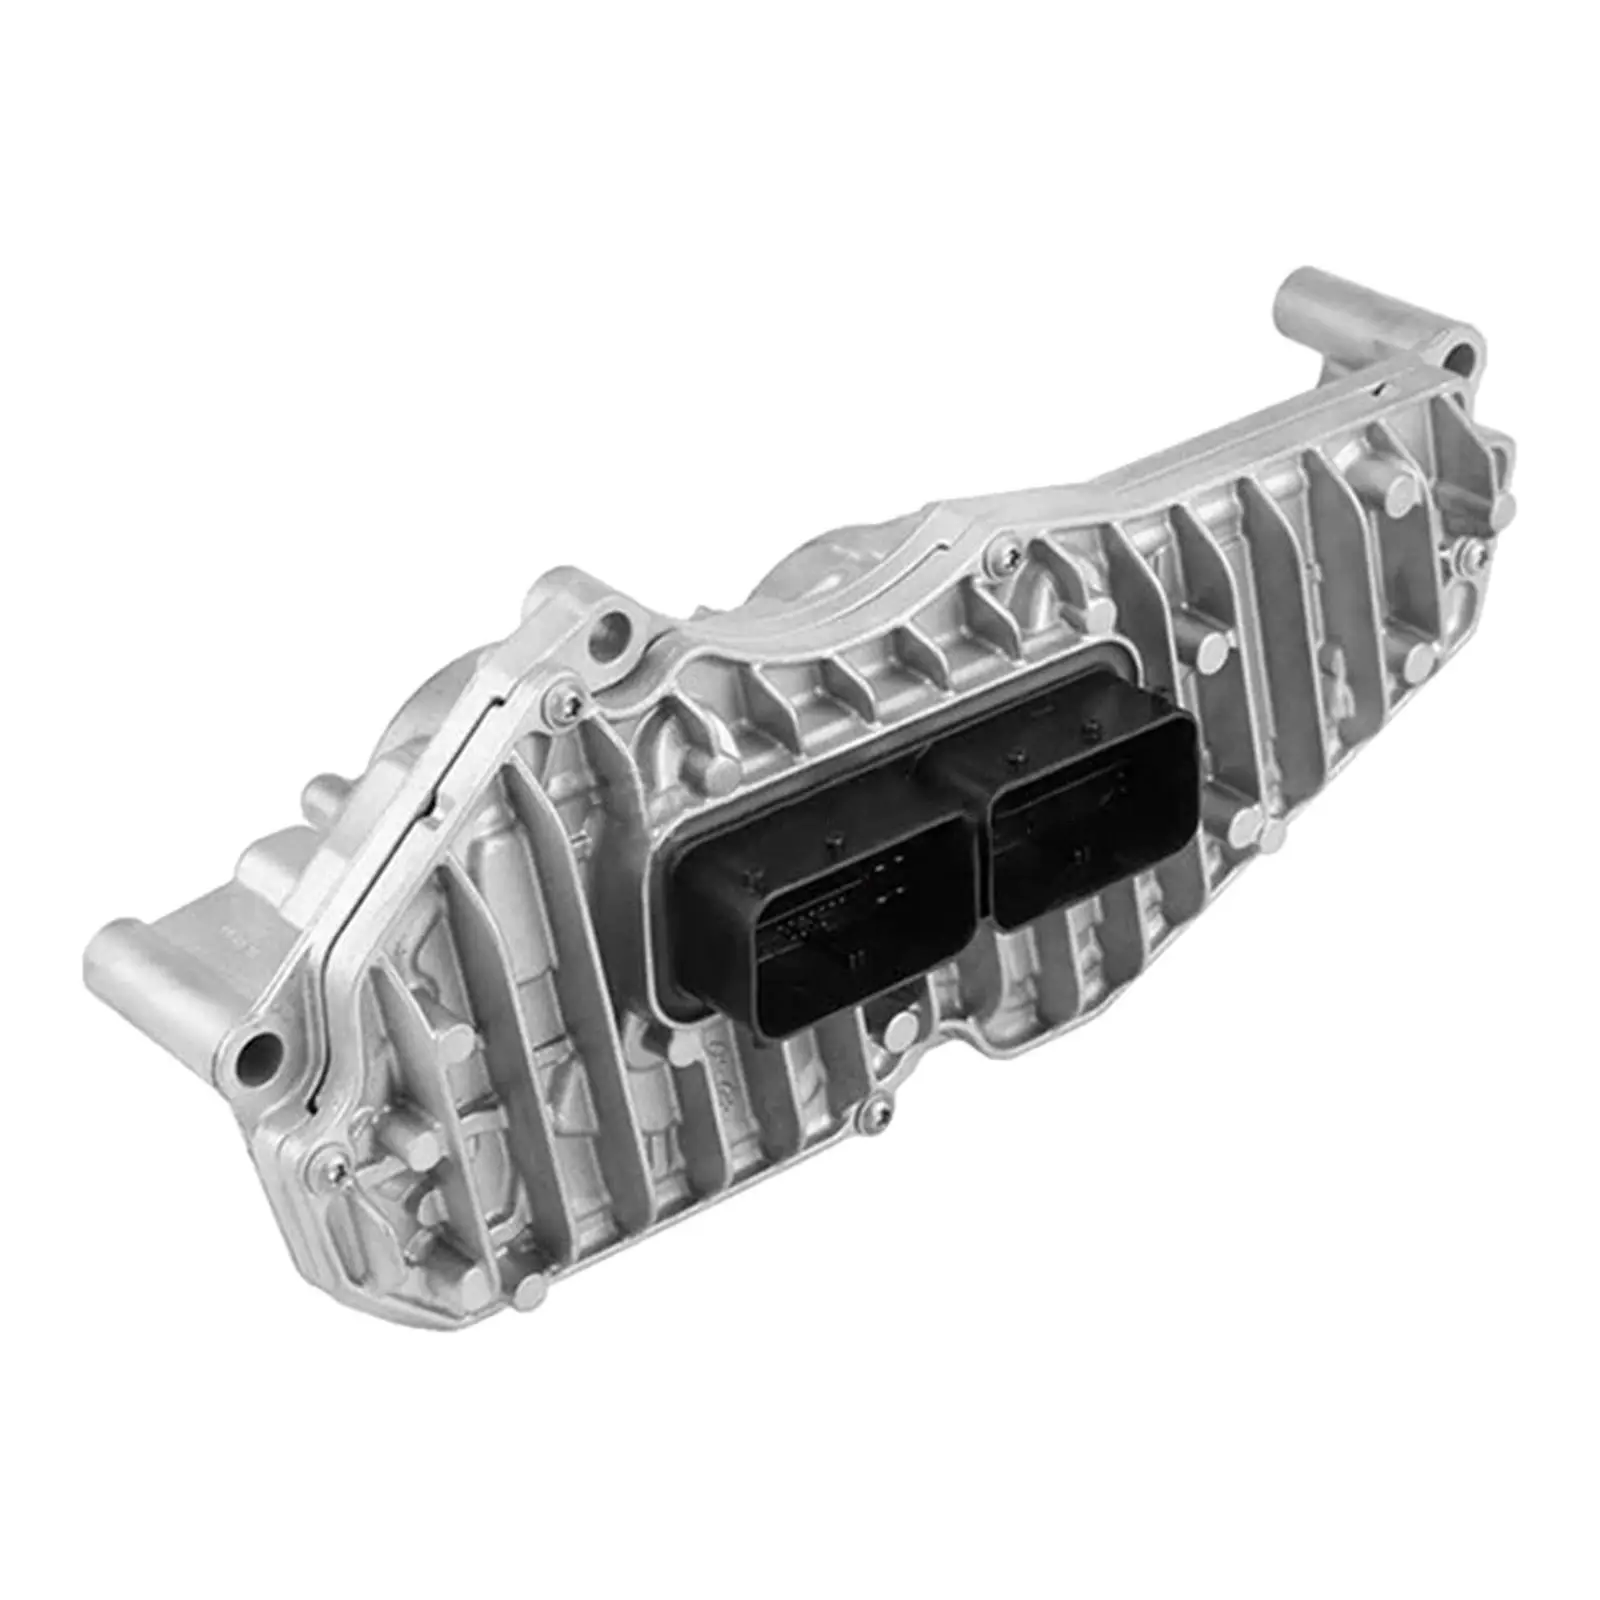 CNC Aluminum TCU Transmission Control Module A2C53377498 fits for Ford Focus 2013 Up , Spare Parts